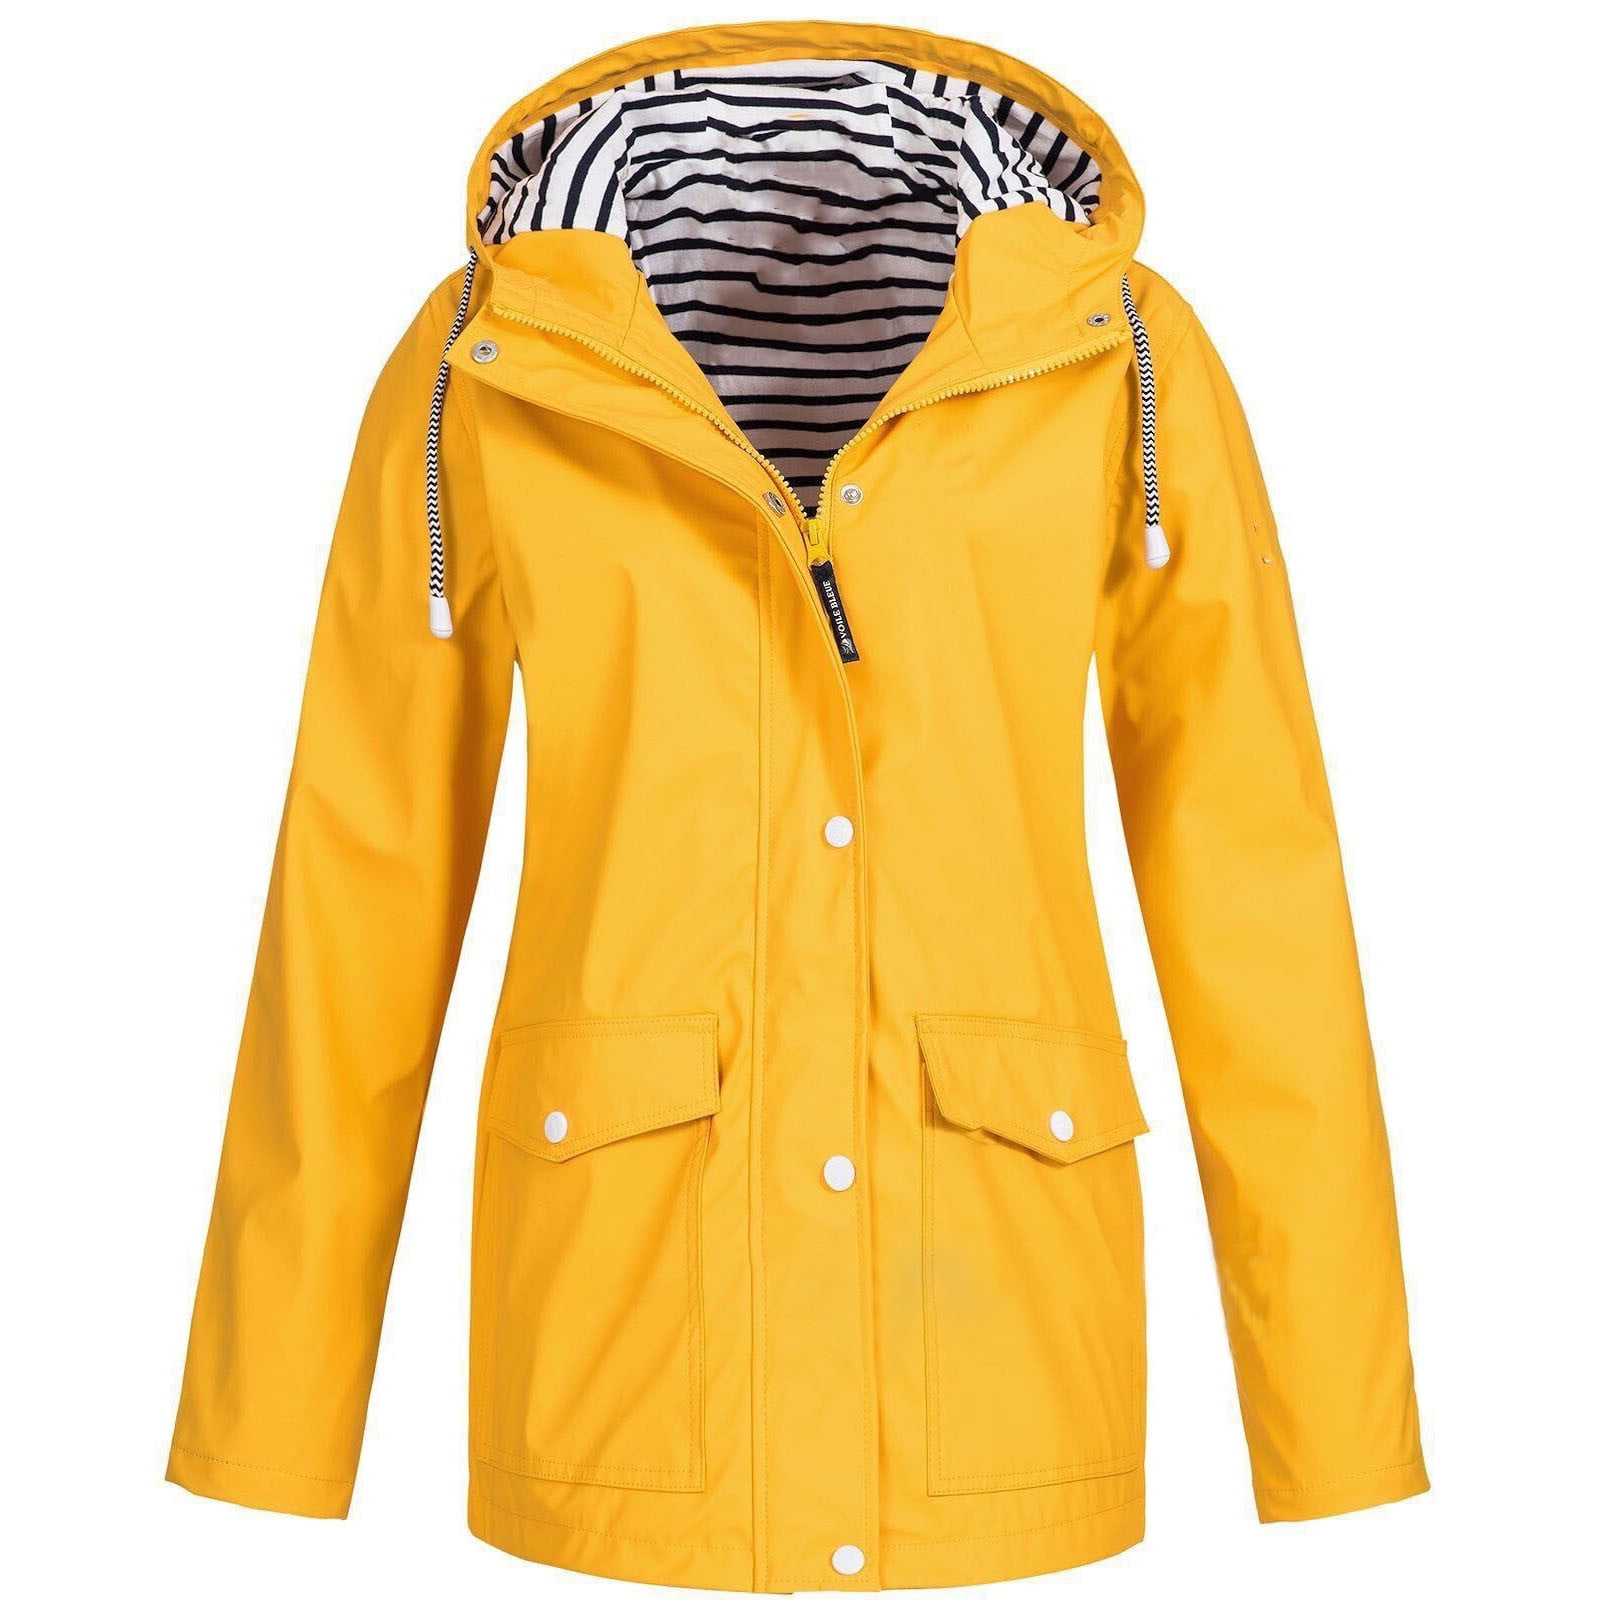 Ikevan Women Solid Rain Jacket Outdoor Plus Size Waterproof Hooded ...